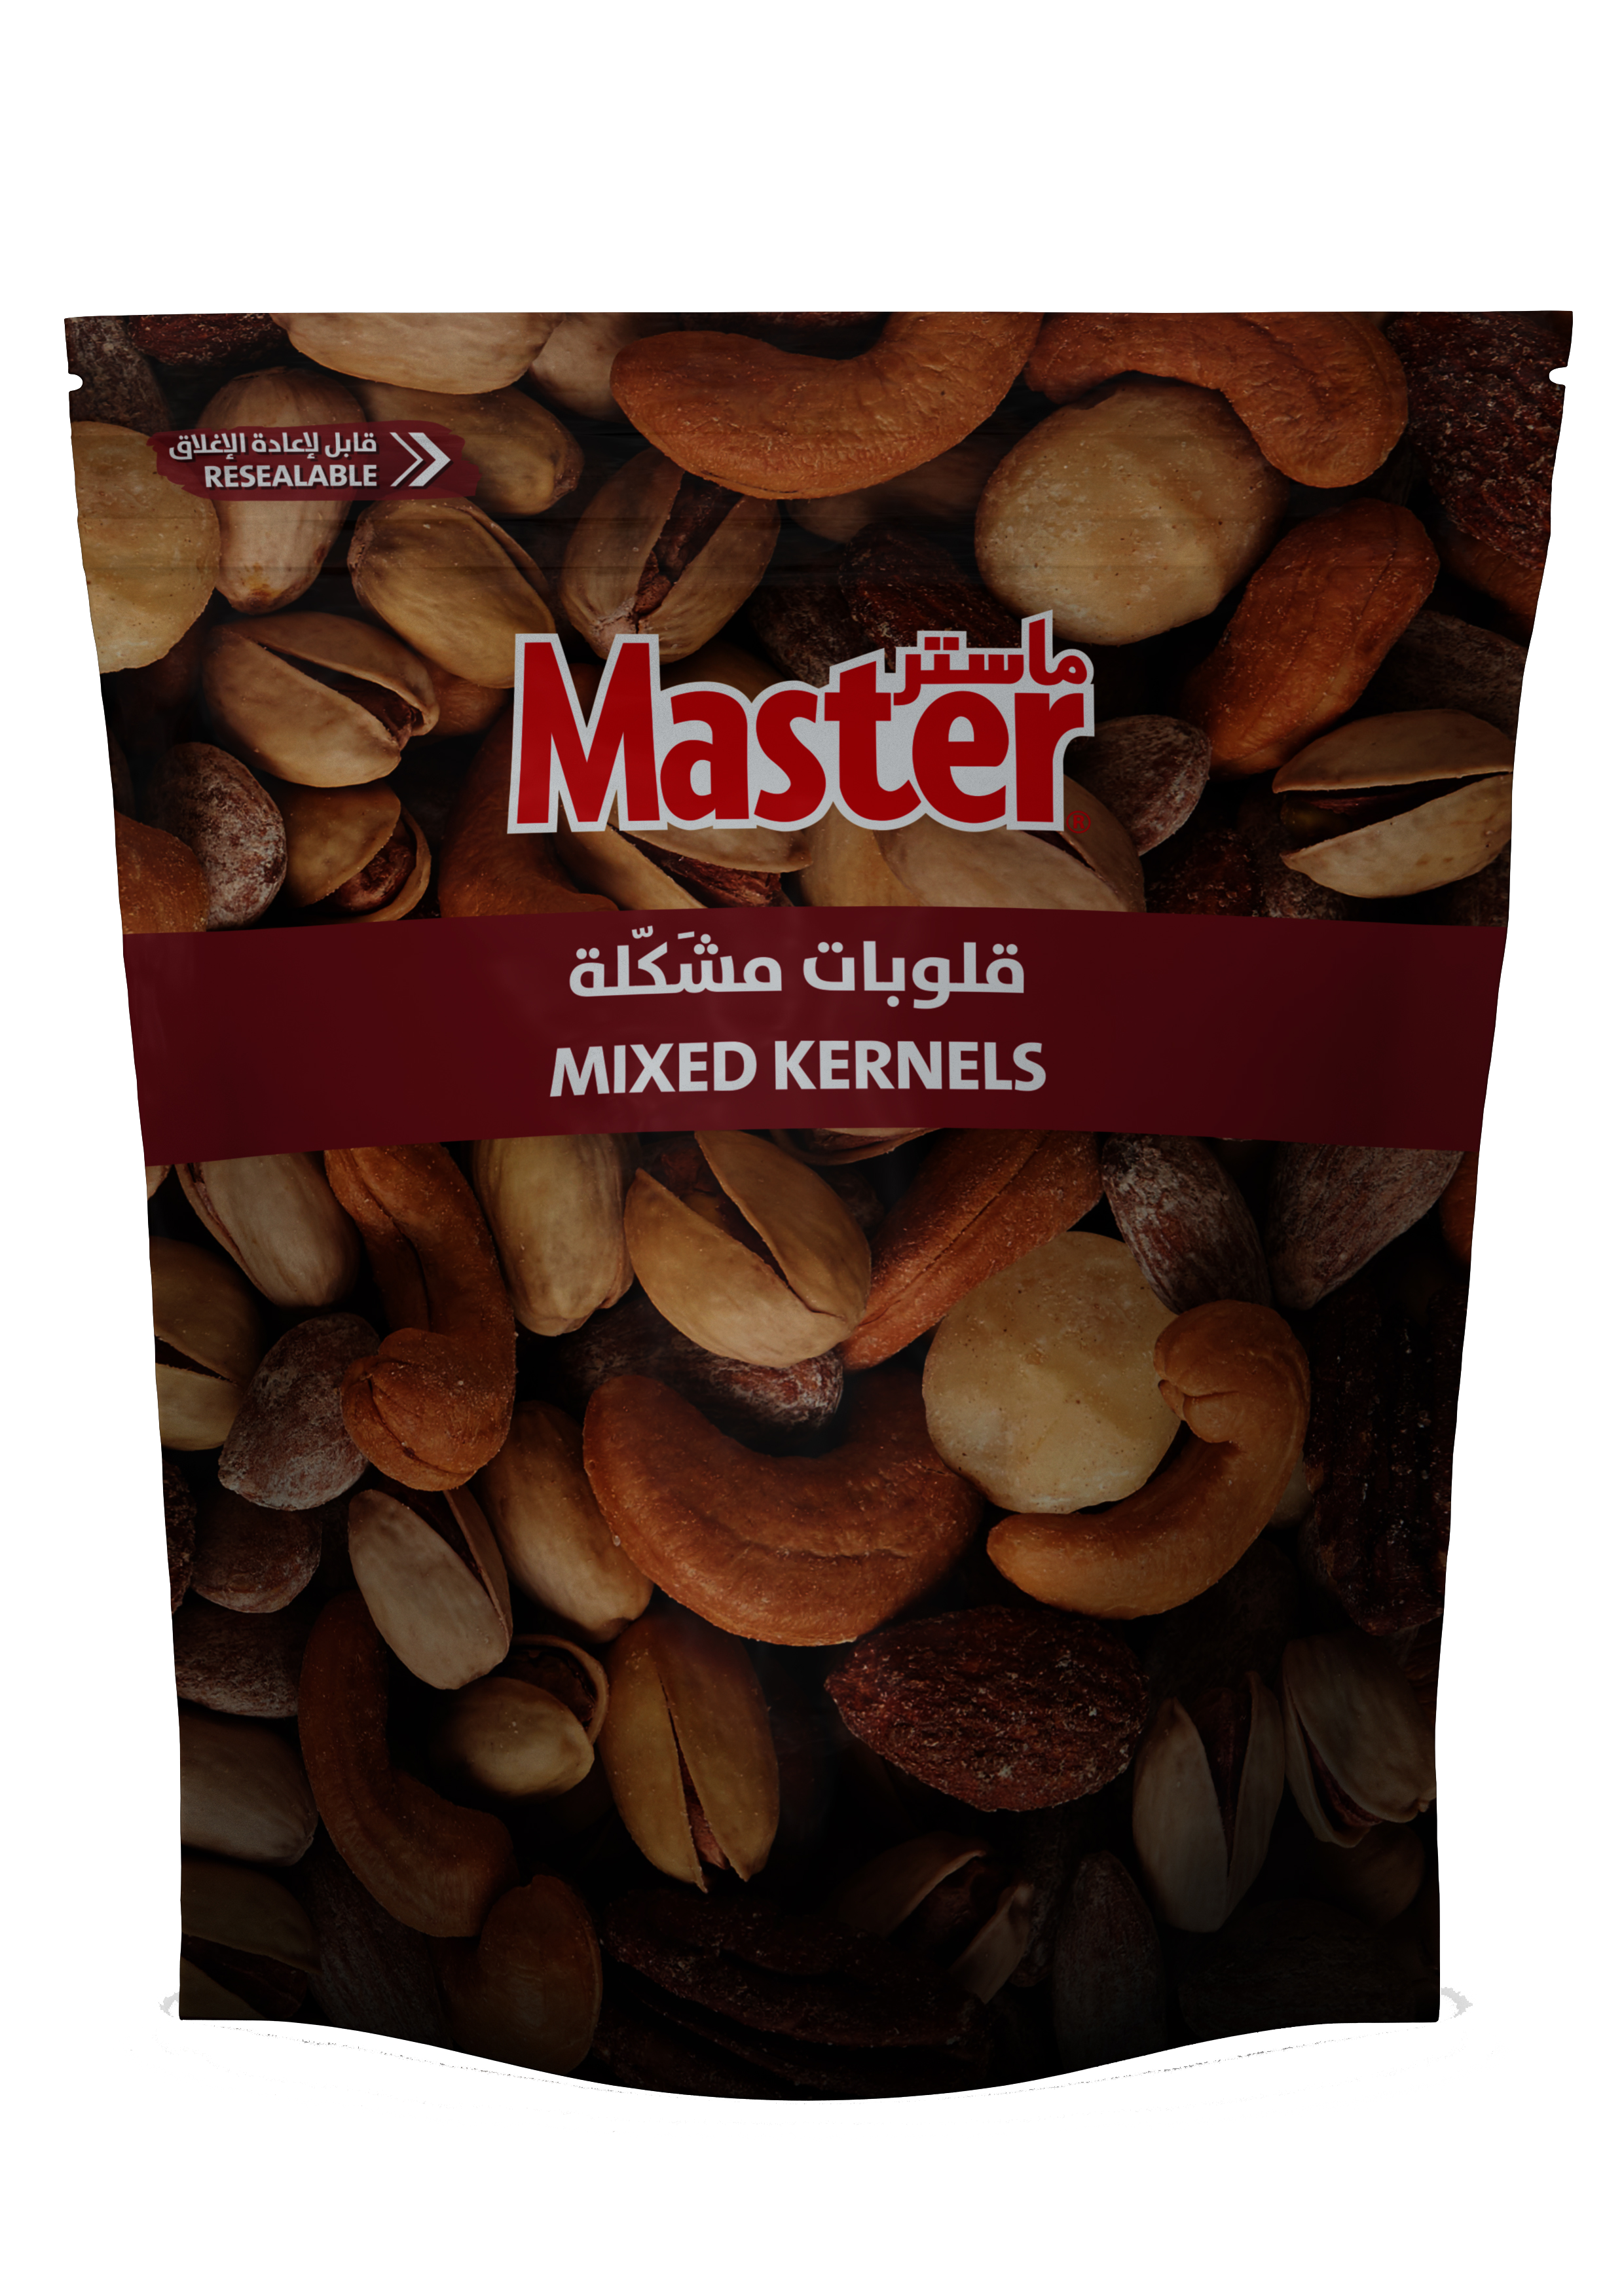 Master Mixed Kernels 75g